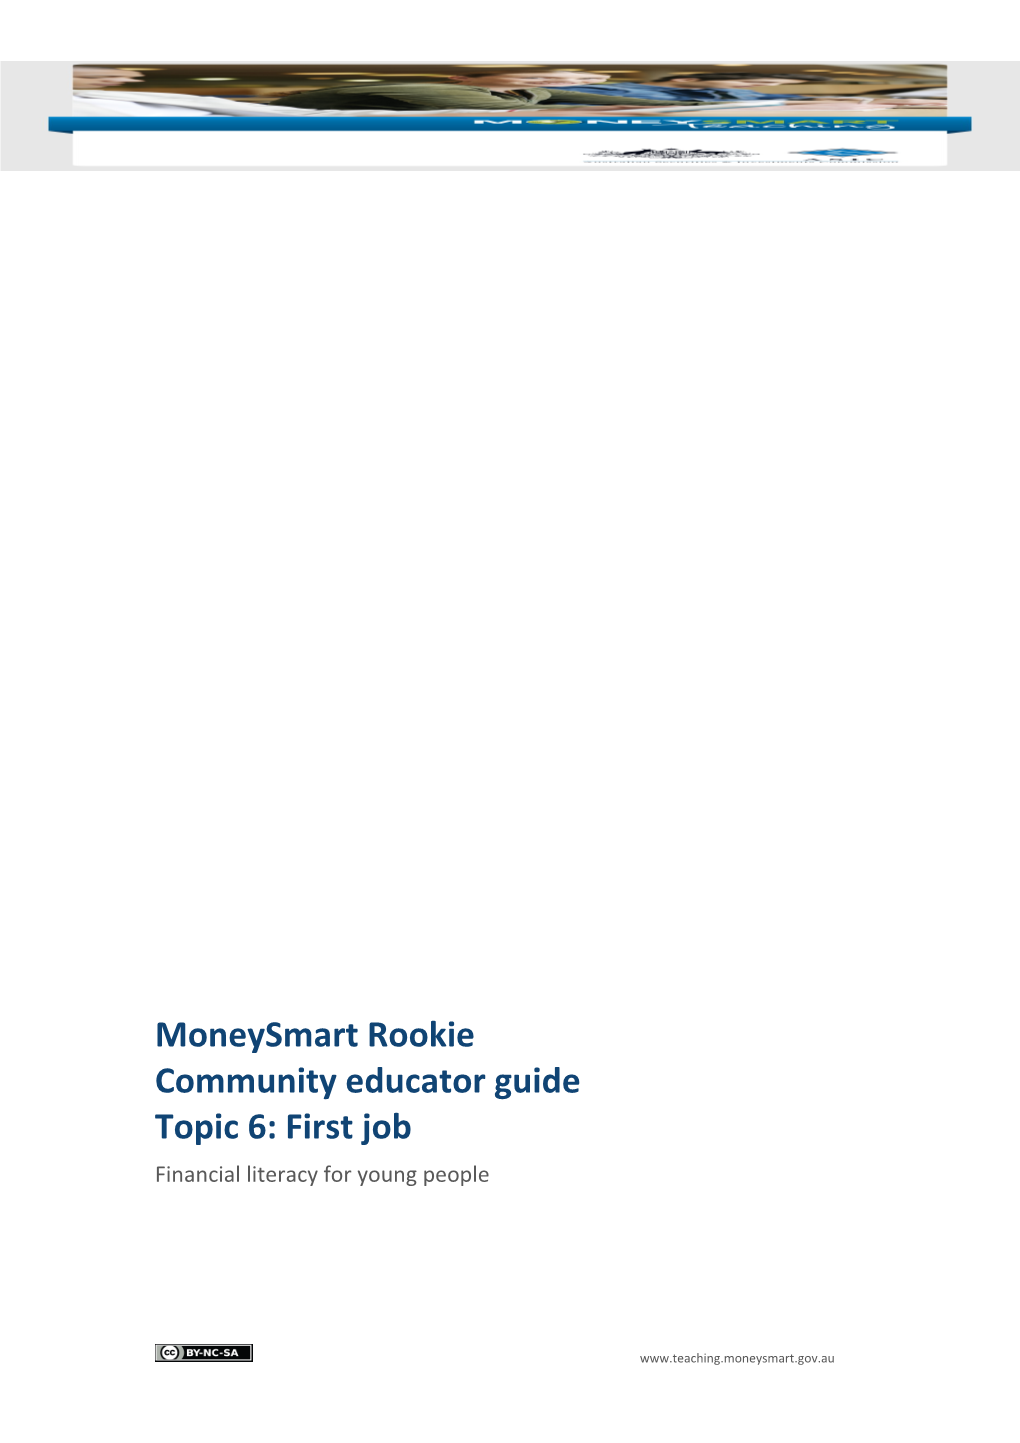 Moneysmart Rookie Community Educator Guide Topic 6: First Job